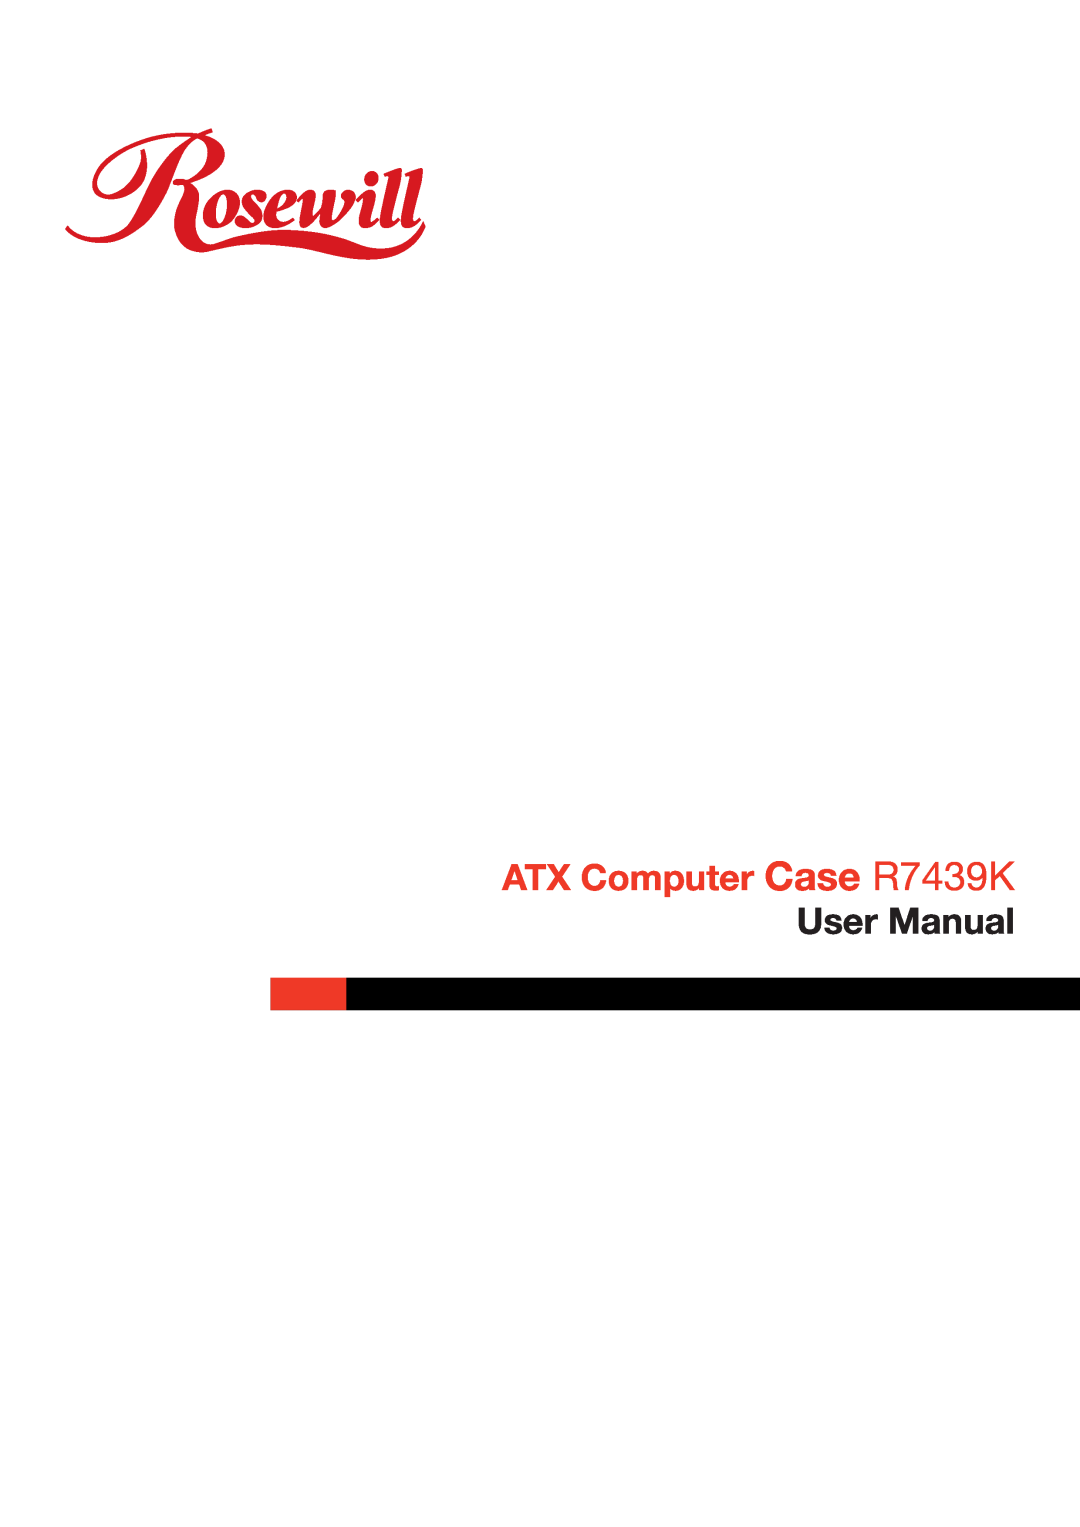 Rosewill user manual ATX Computer Case R7439K, User Manual 